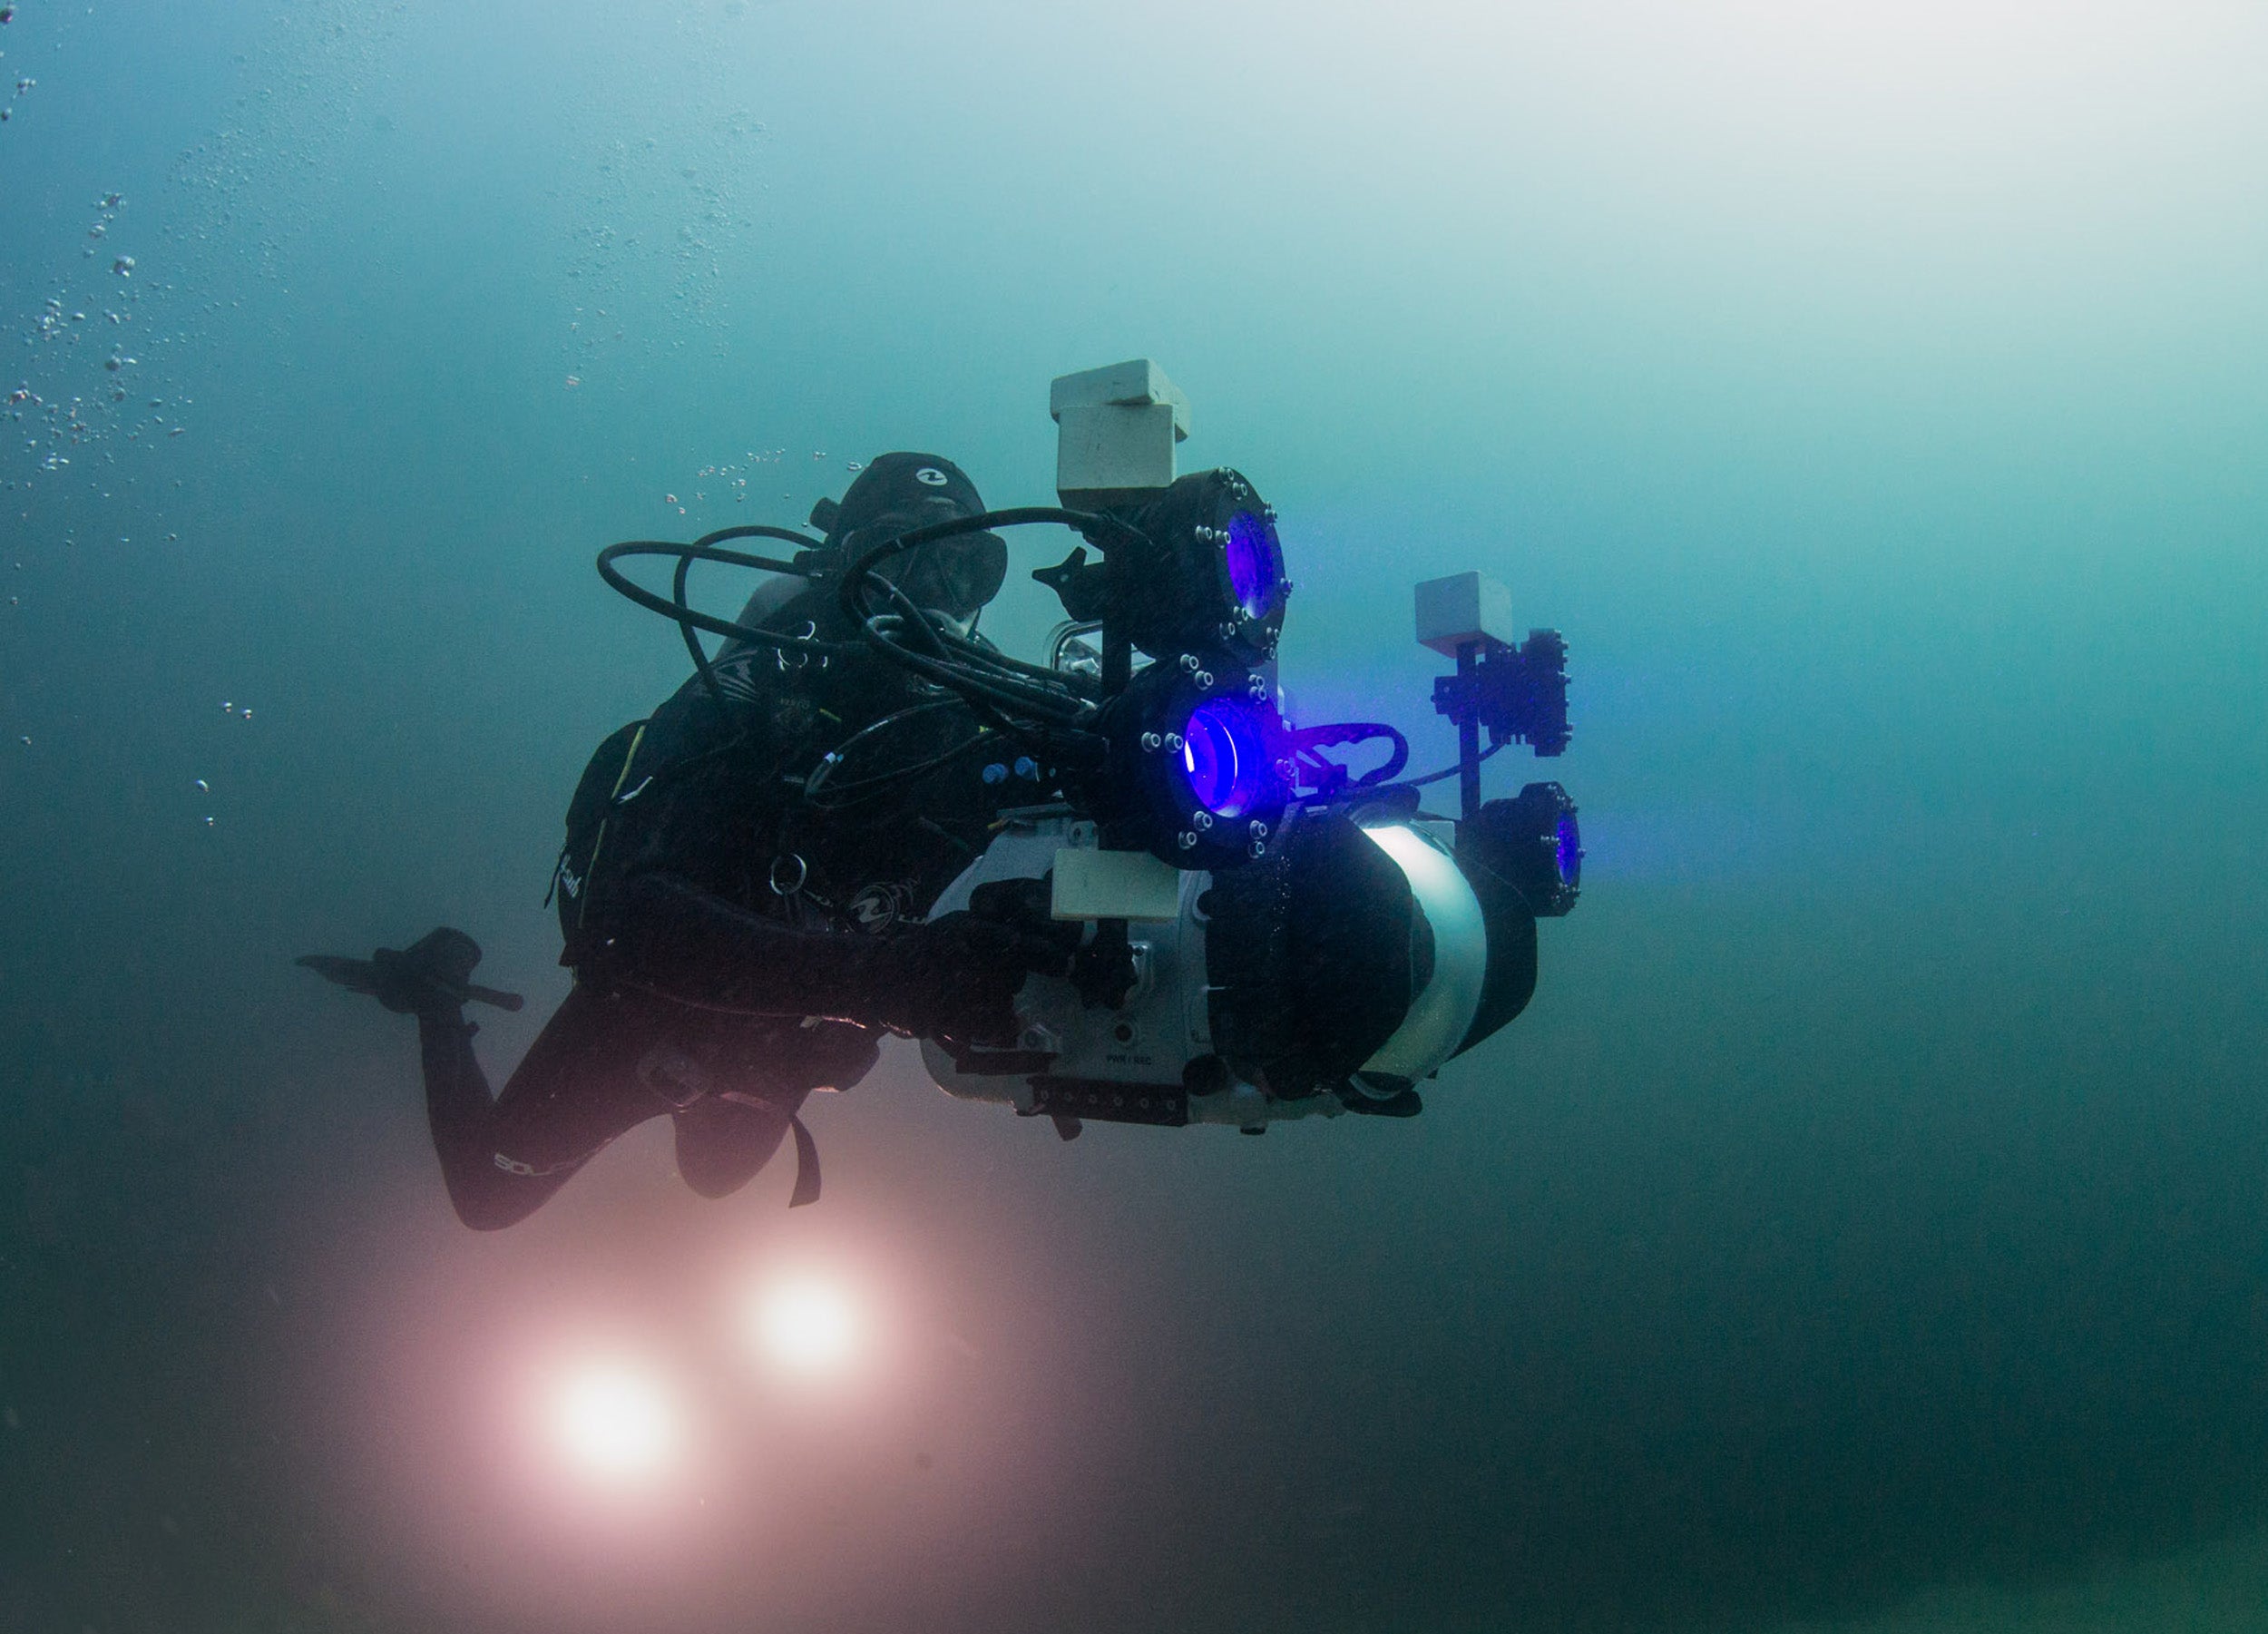 David Gruber photographs underwater using a "shark-eye" camera.